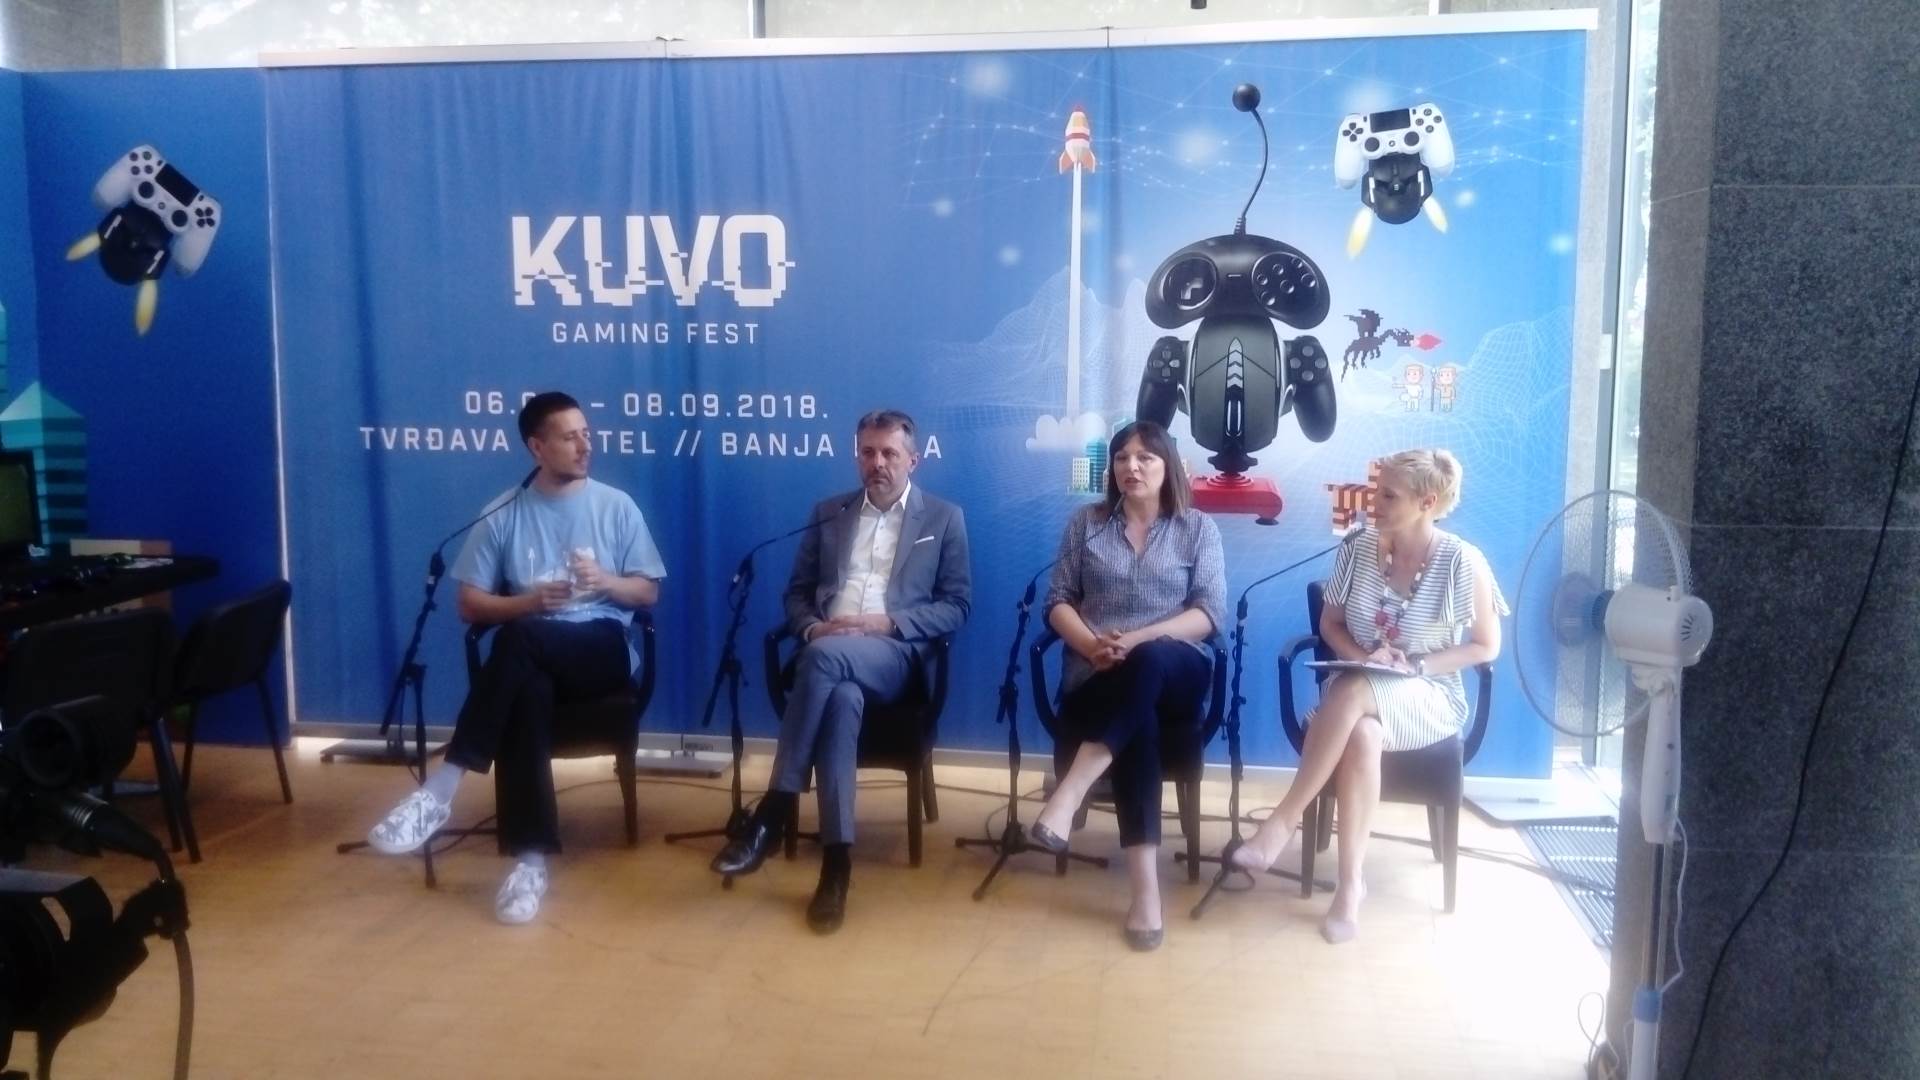  "Kuvo Gaming Fest" u Banjaluci 